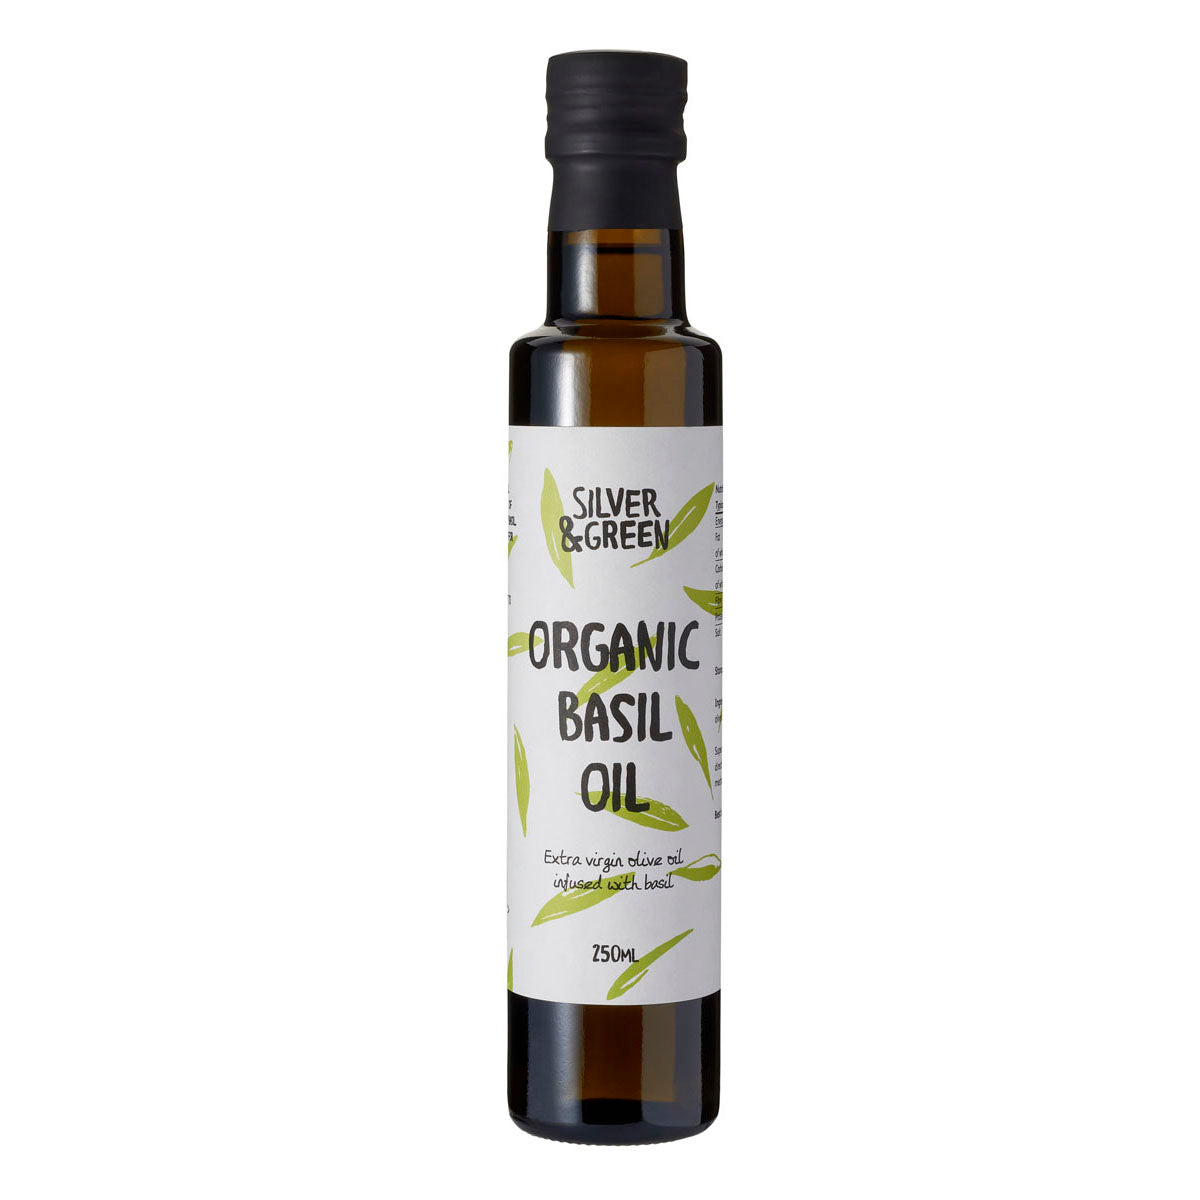 Silver & Green - Olive Oil - Organic Basil - 250ml